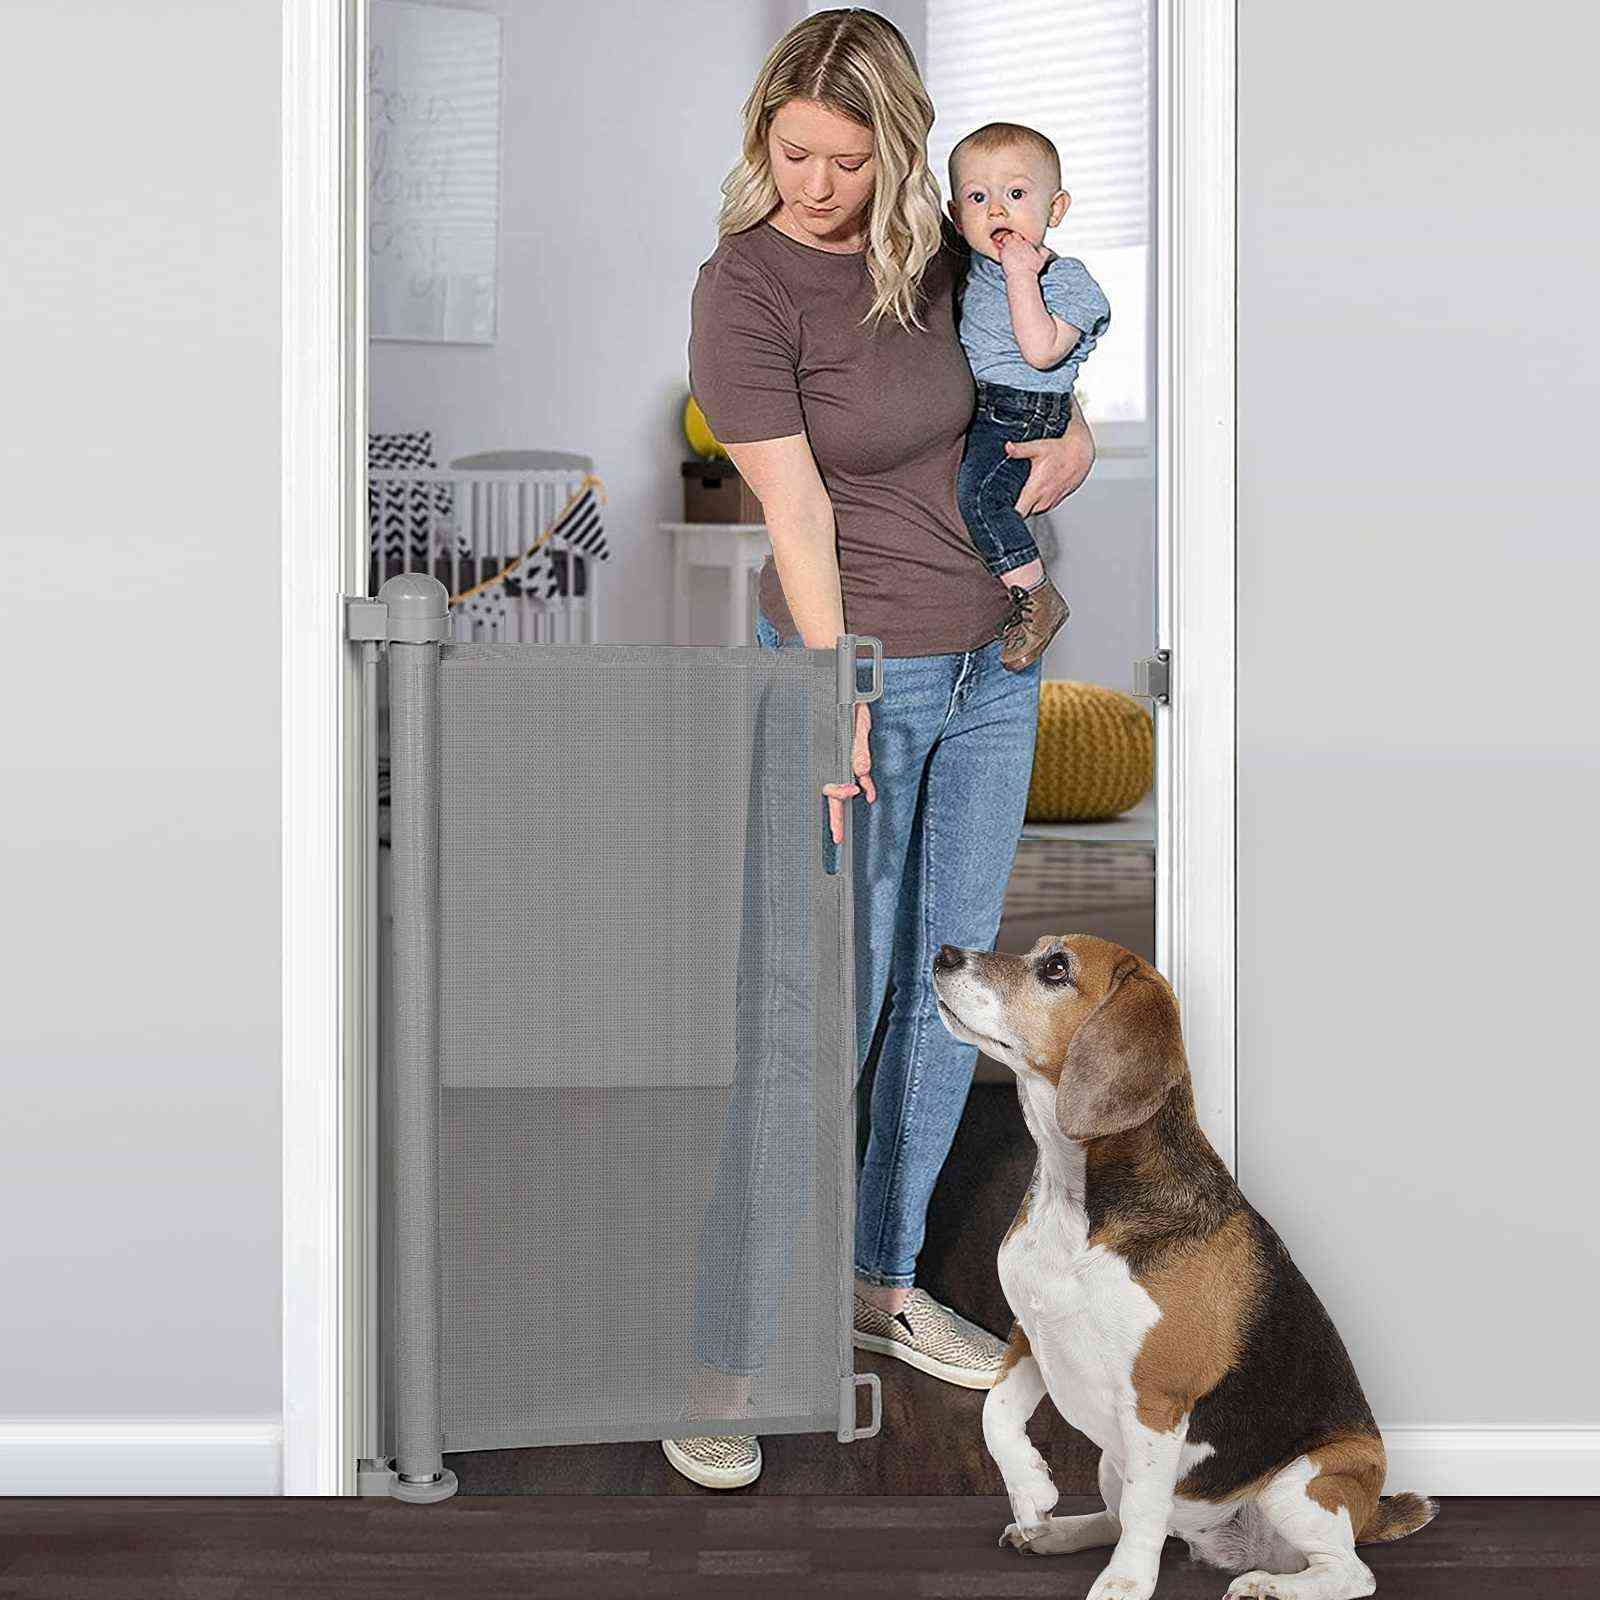 Retractable Baby Gate Child Safety Barrier Extra Wide Mesh Safety Door For Doorways Stairs Hallways Indoor Outdoor Pet Dog Gate